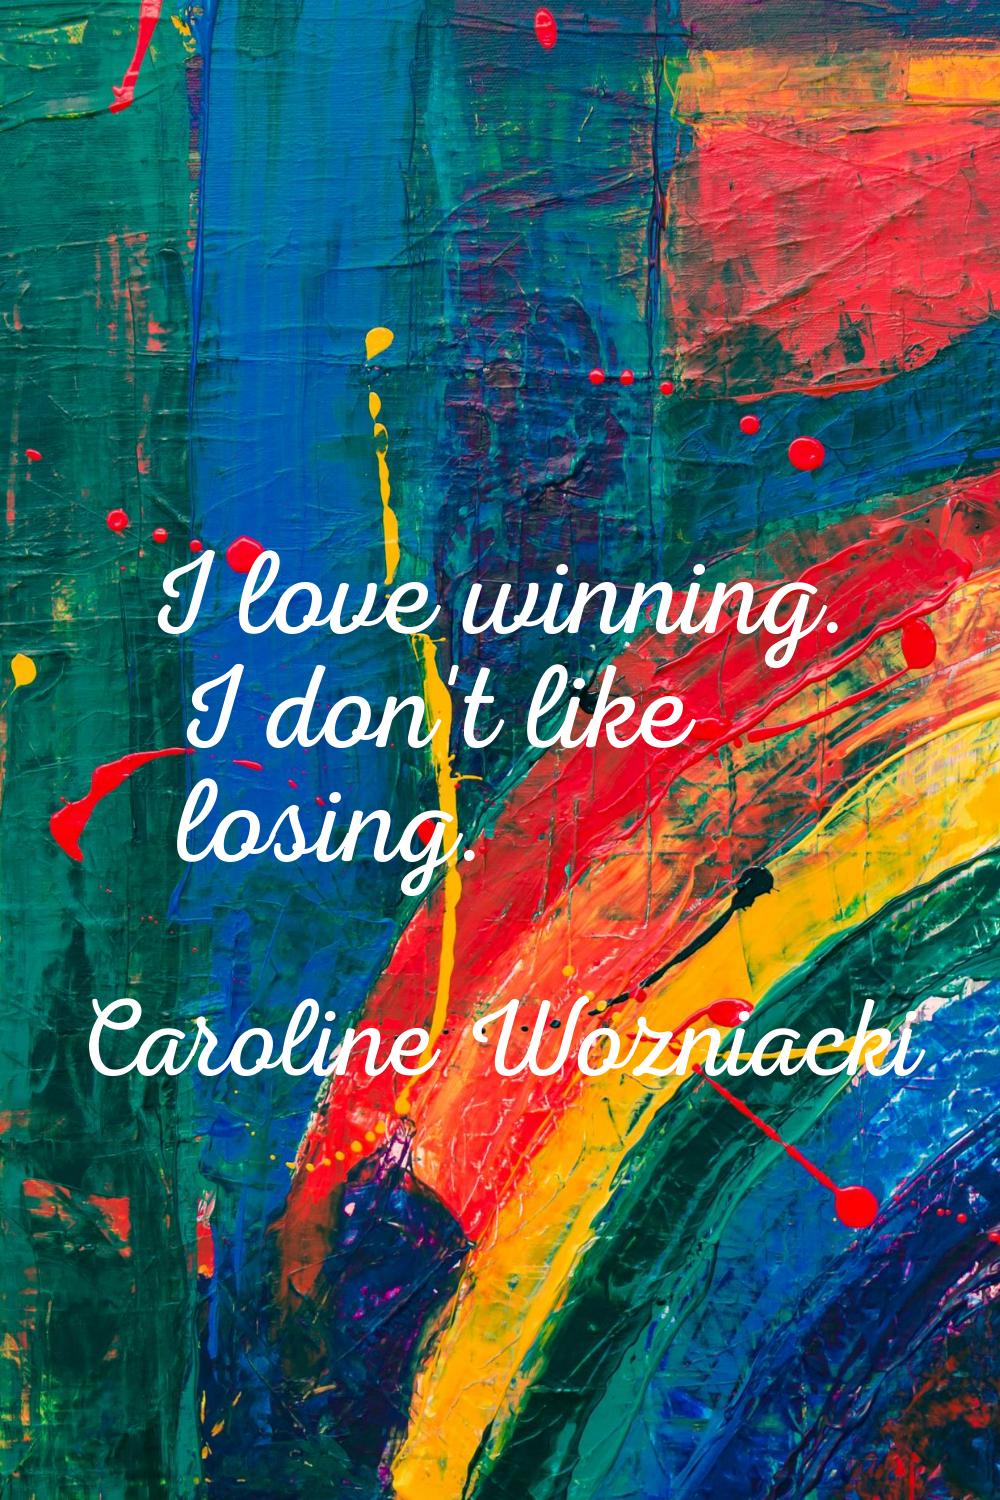 I love winning. I don't like losing.